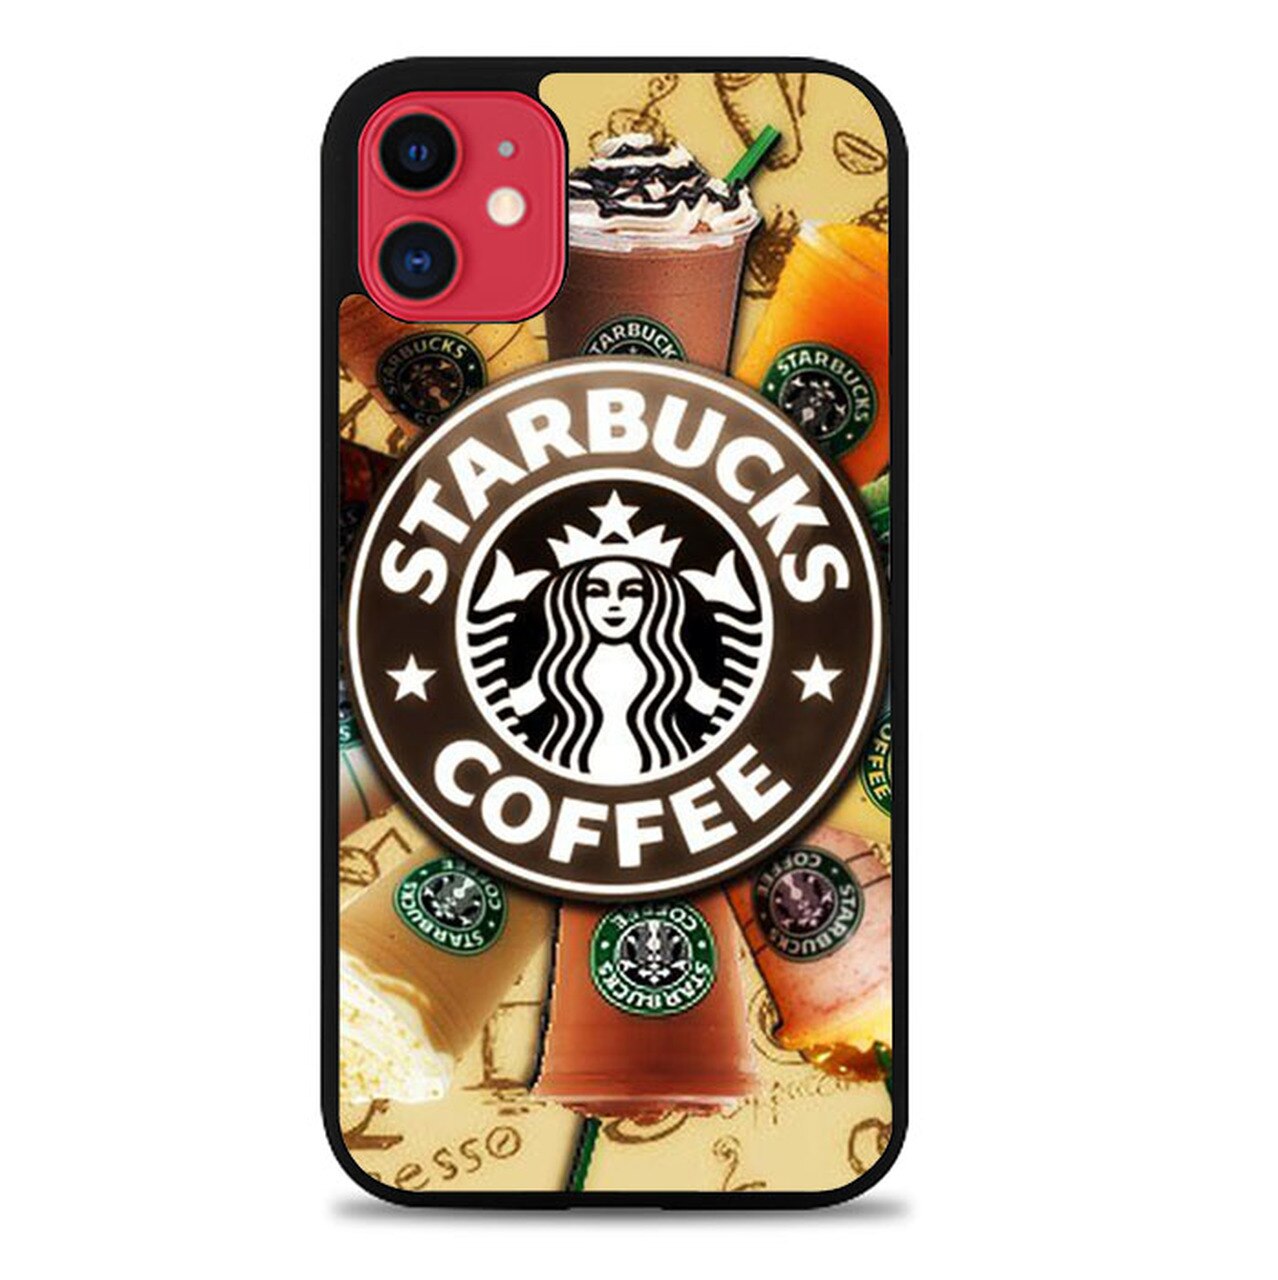 Pumpkin Spice Latte Starbucks Uk - HD Wallpaper 